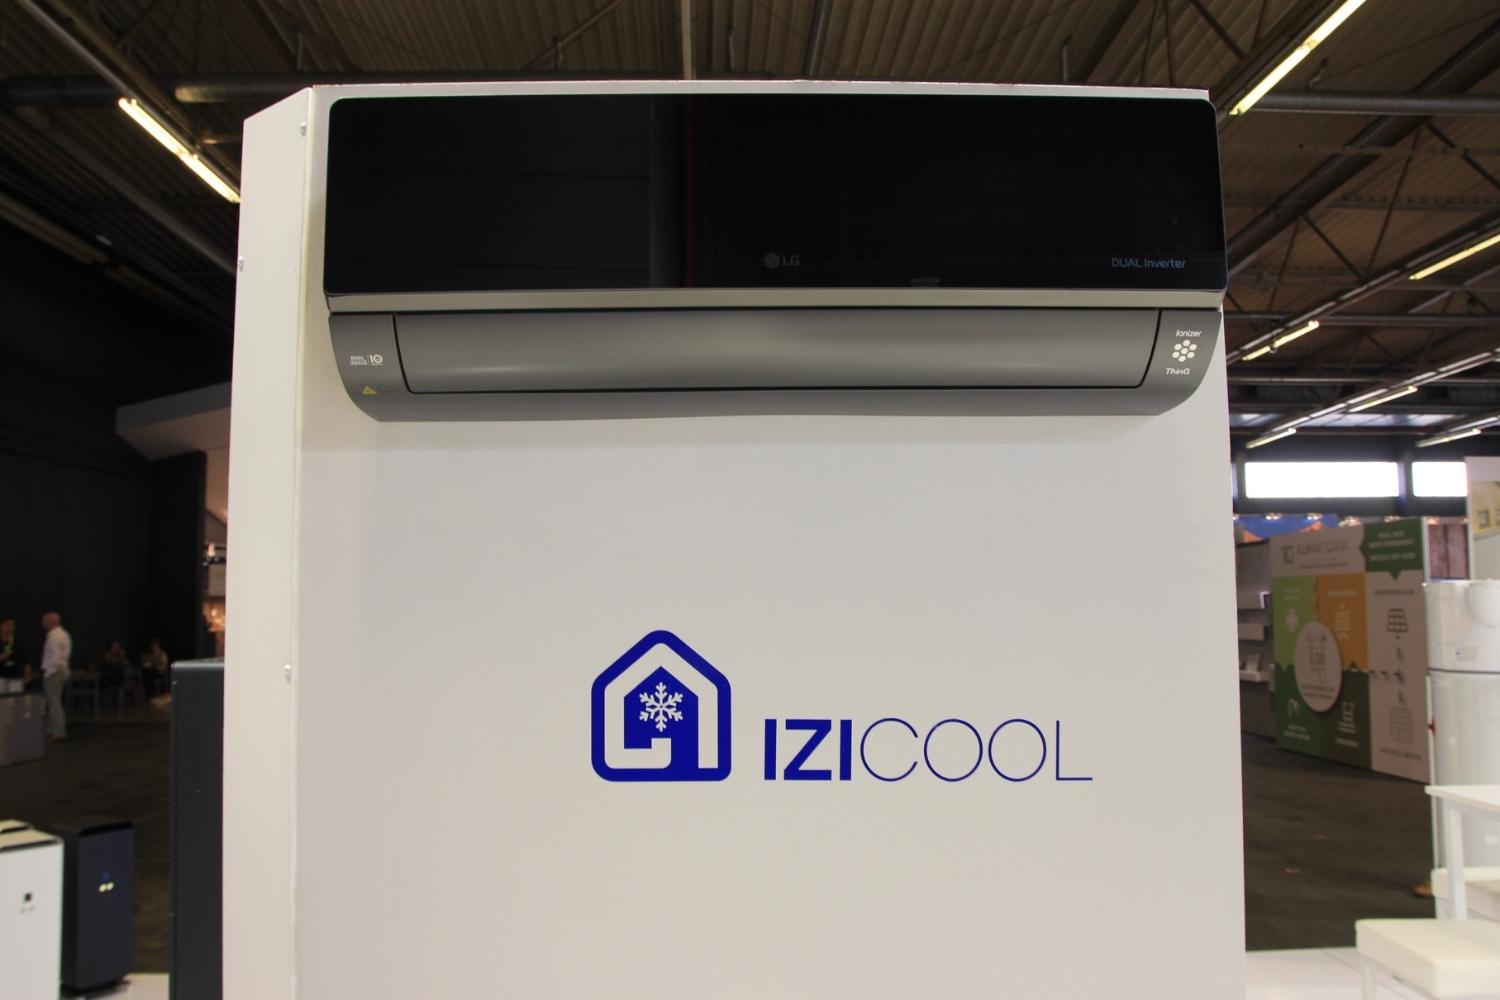 Beste airco zonder IZI Cool airco's | Informatie